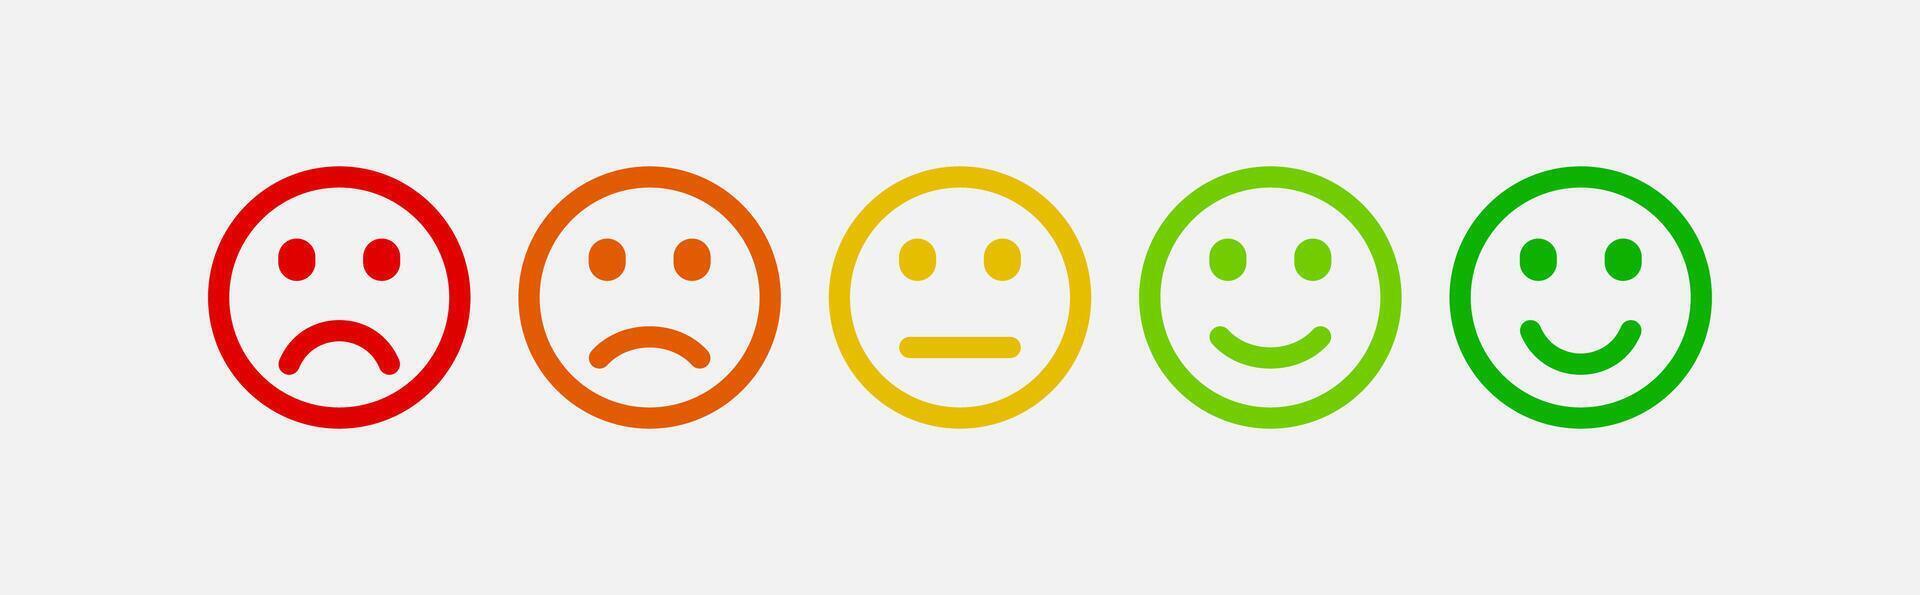 Emotional Mood scale emoji. Customer Satisfaction Indicator Emoticons Isolated Vector. vector